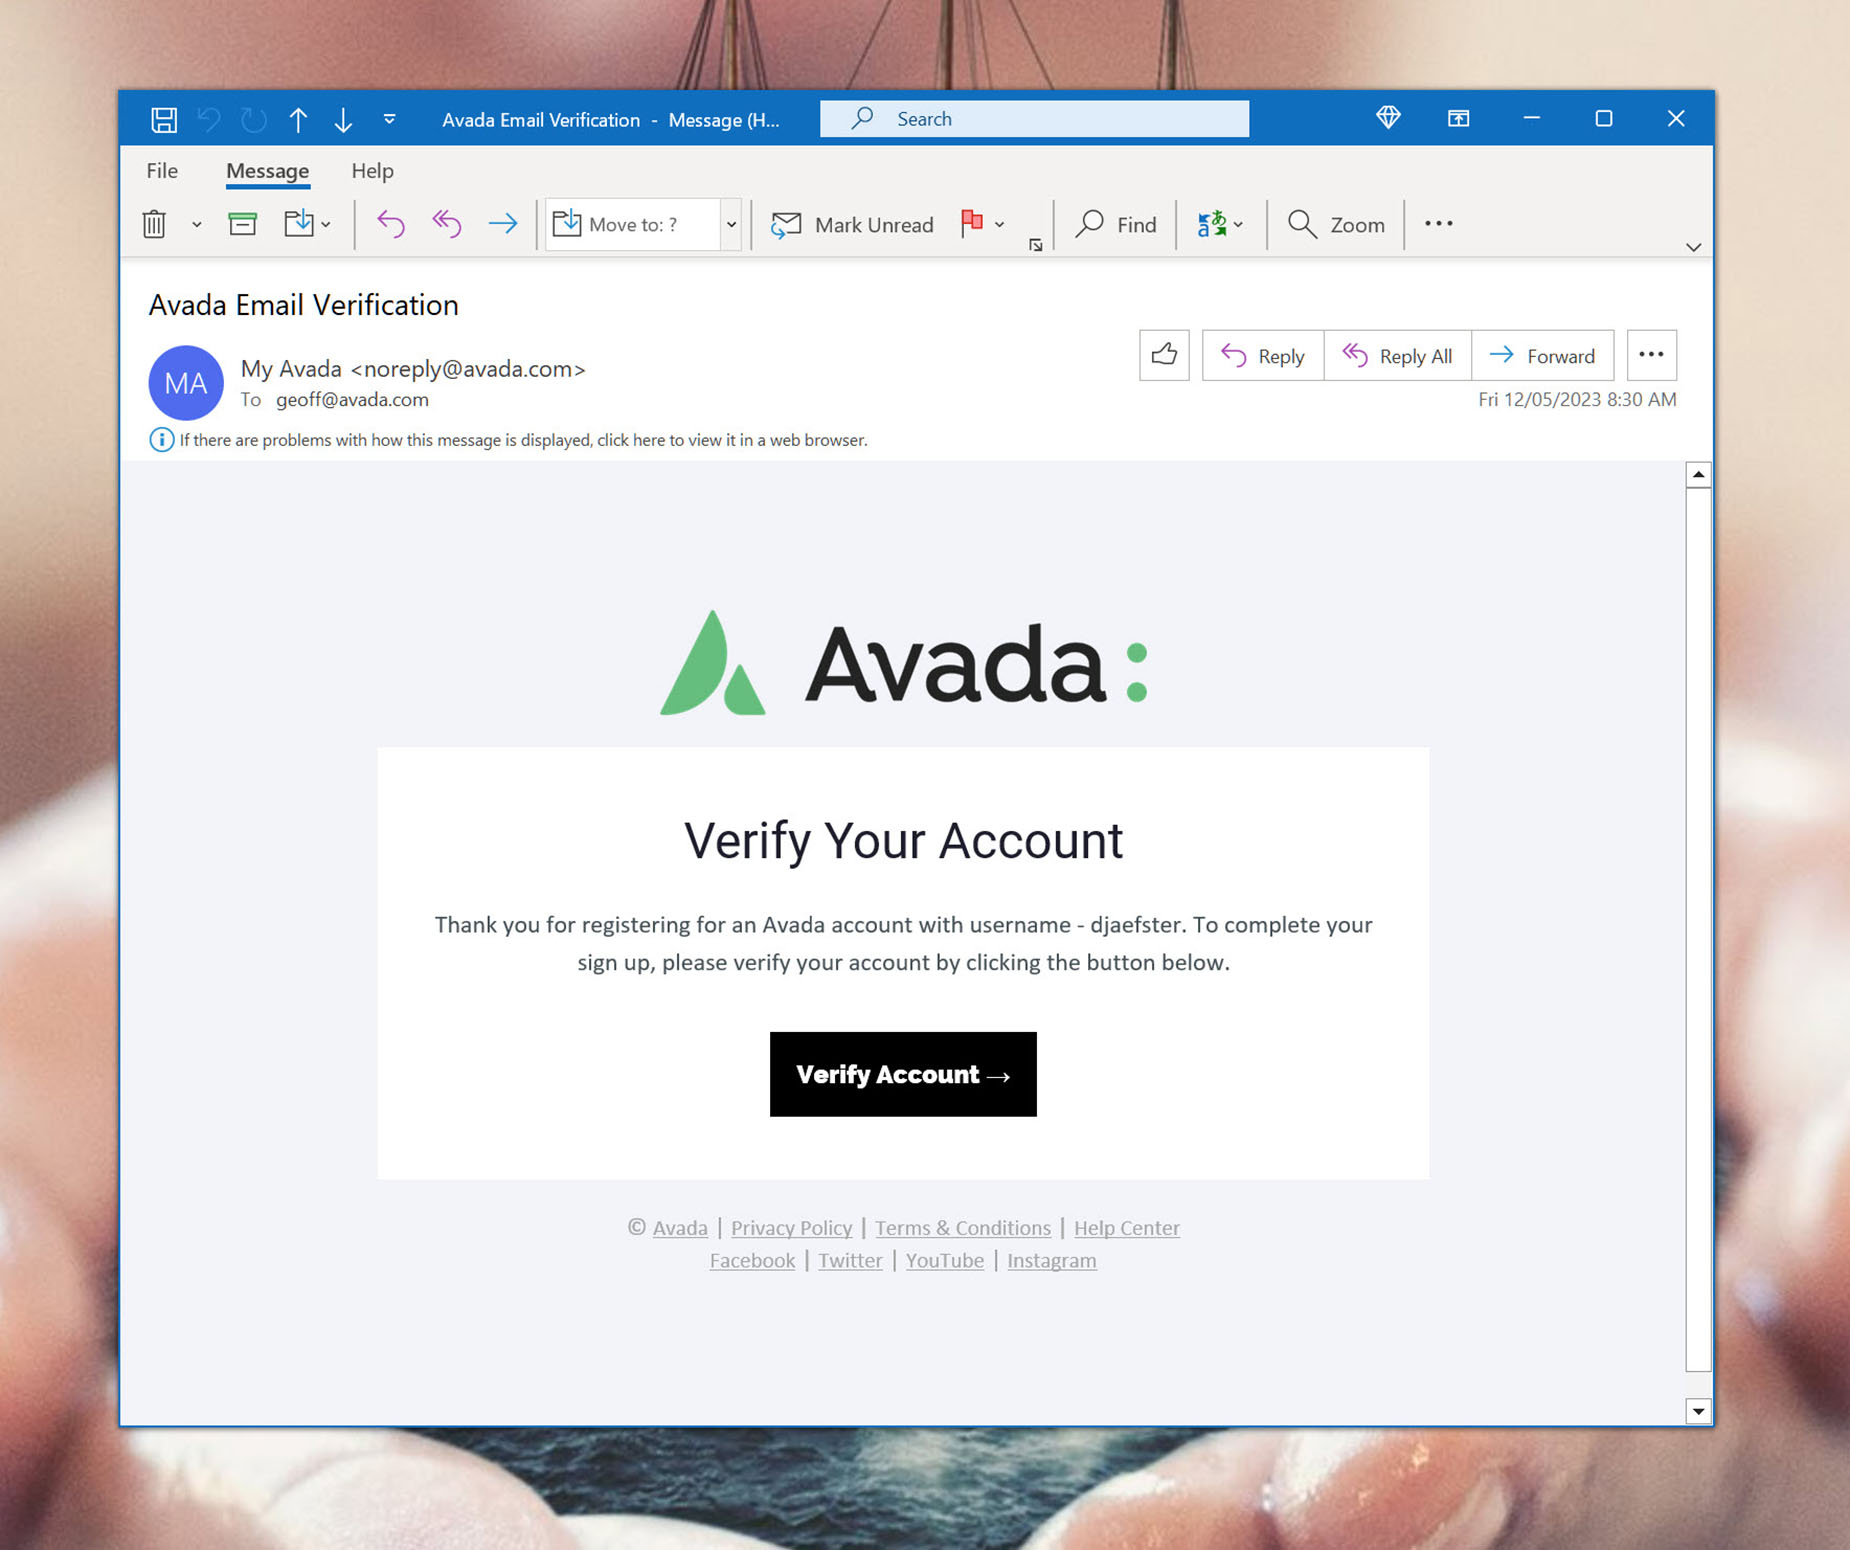 My Avada > Email Account Verification